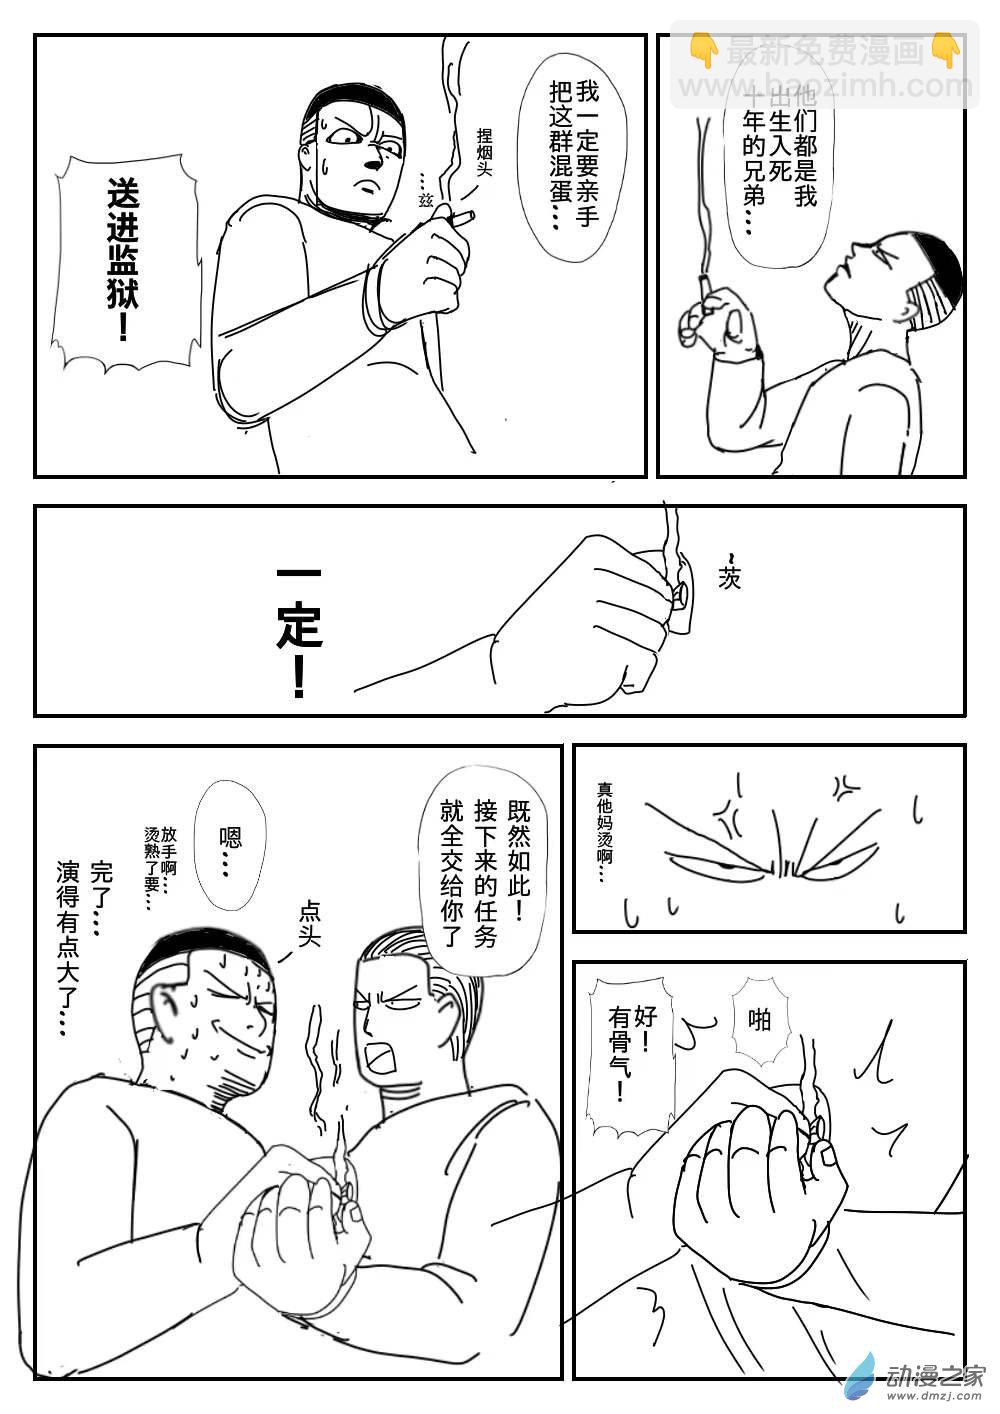 K神的短篇漫畫集 - 01 臥底阿潮 - 2